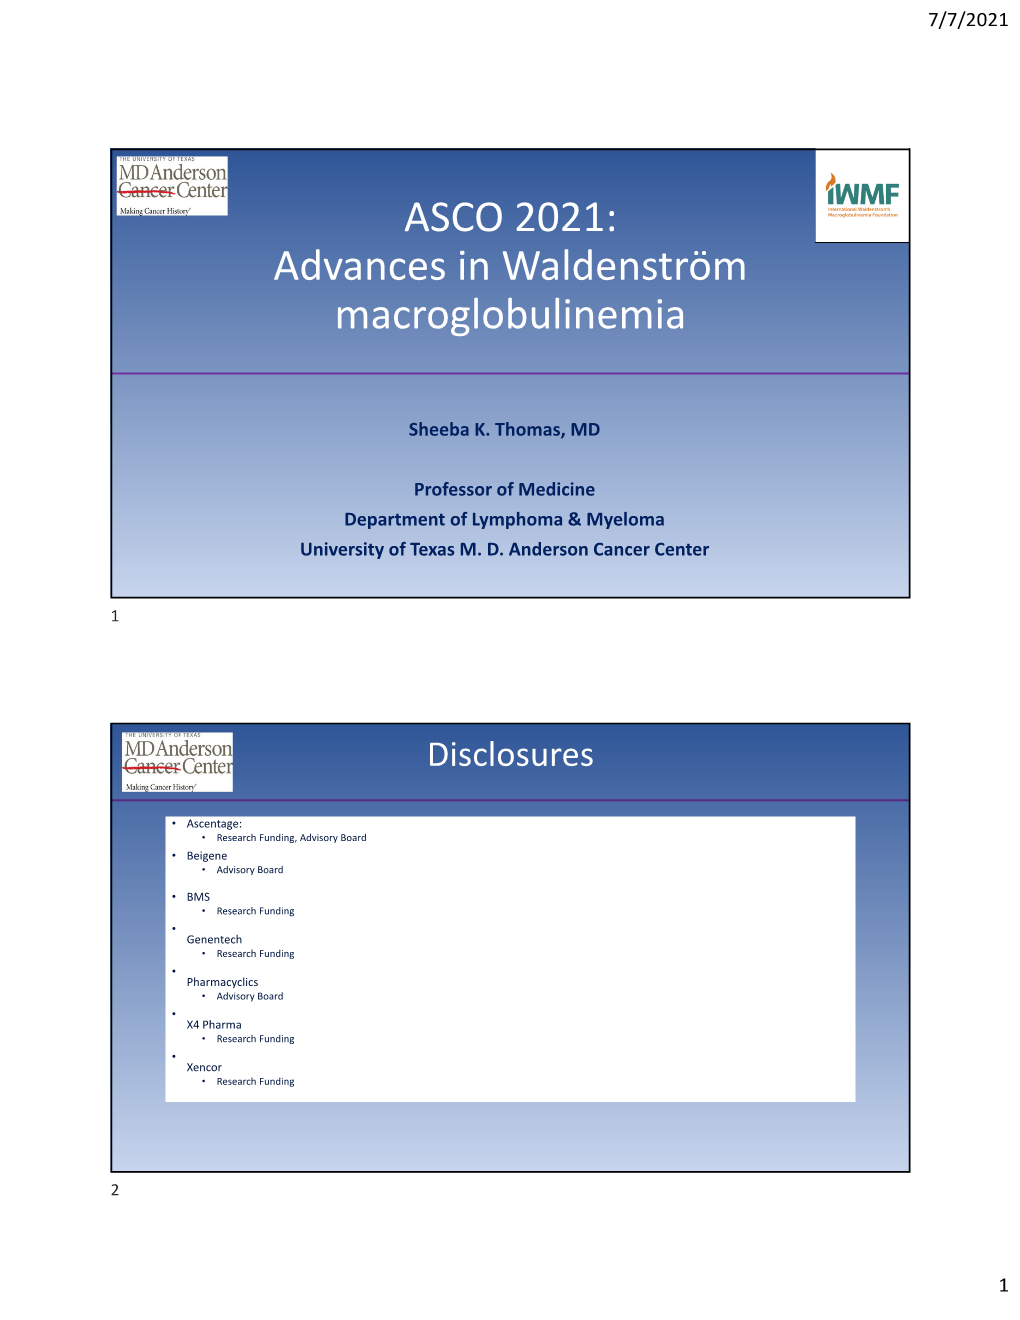 ASCO 2021: Advances in Waldenström Macroglobulinemia